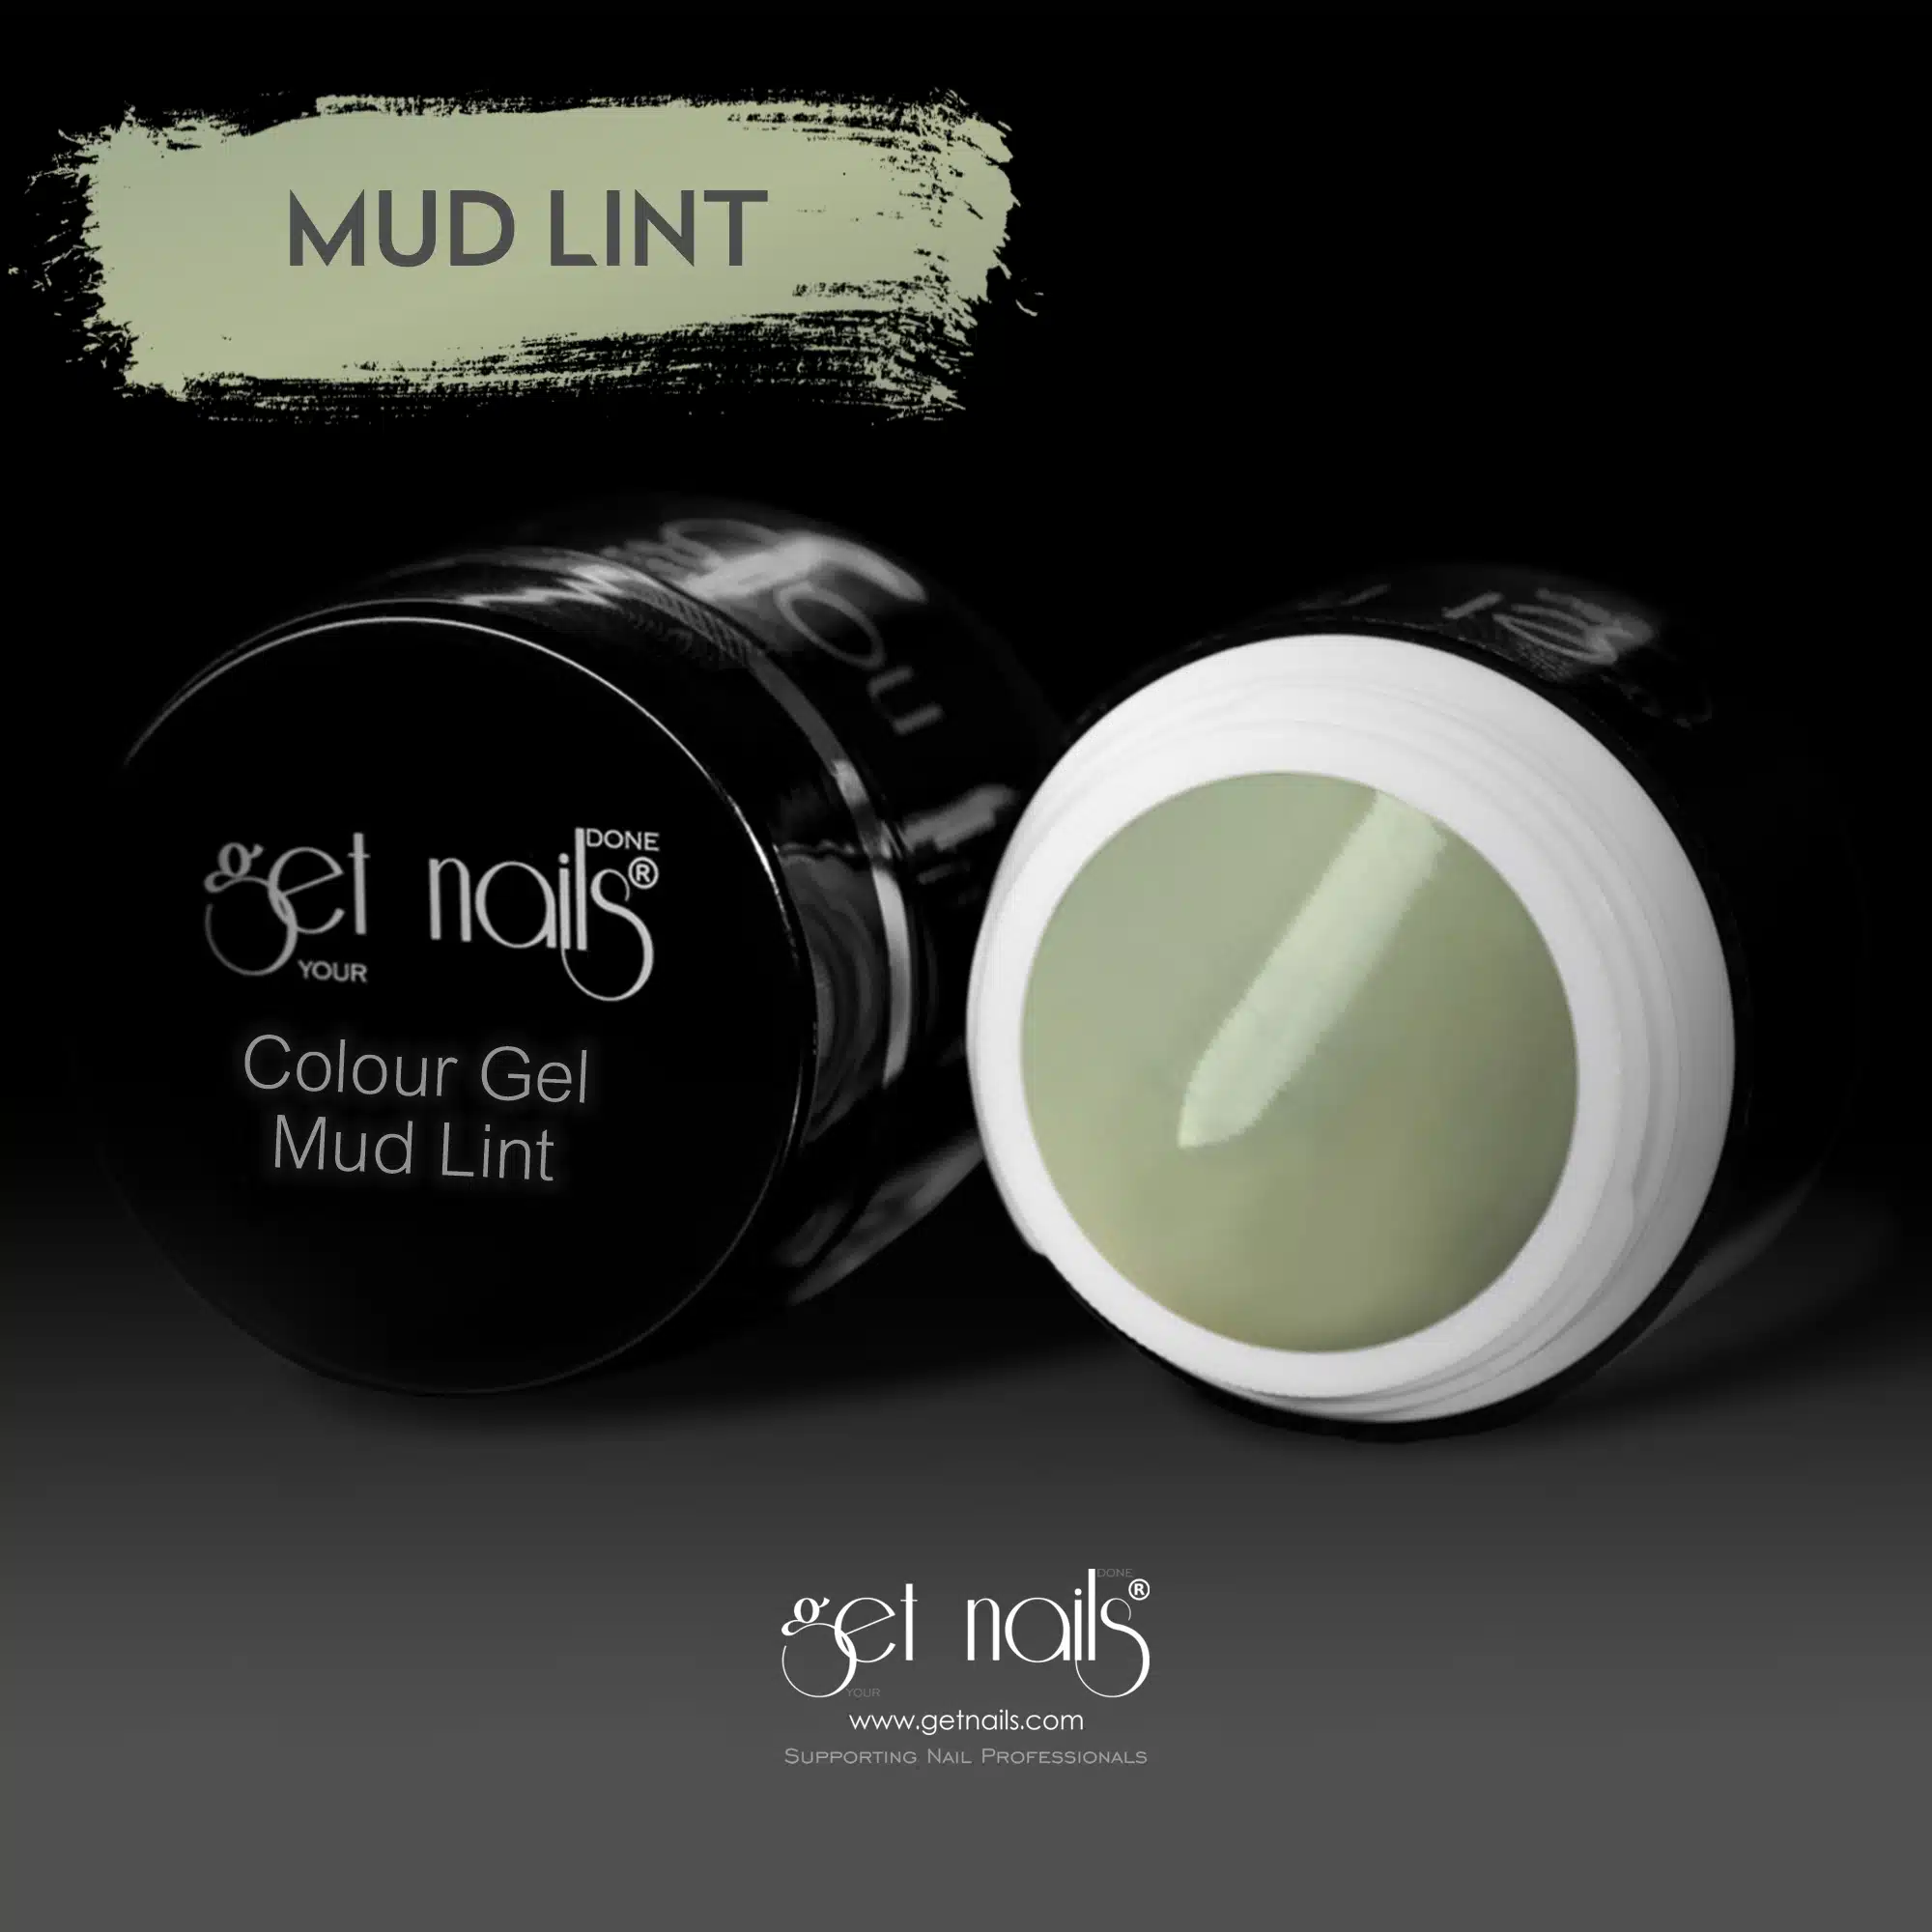 Get Nails Austria - Color Gel Mud Lint 5g